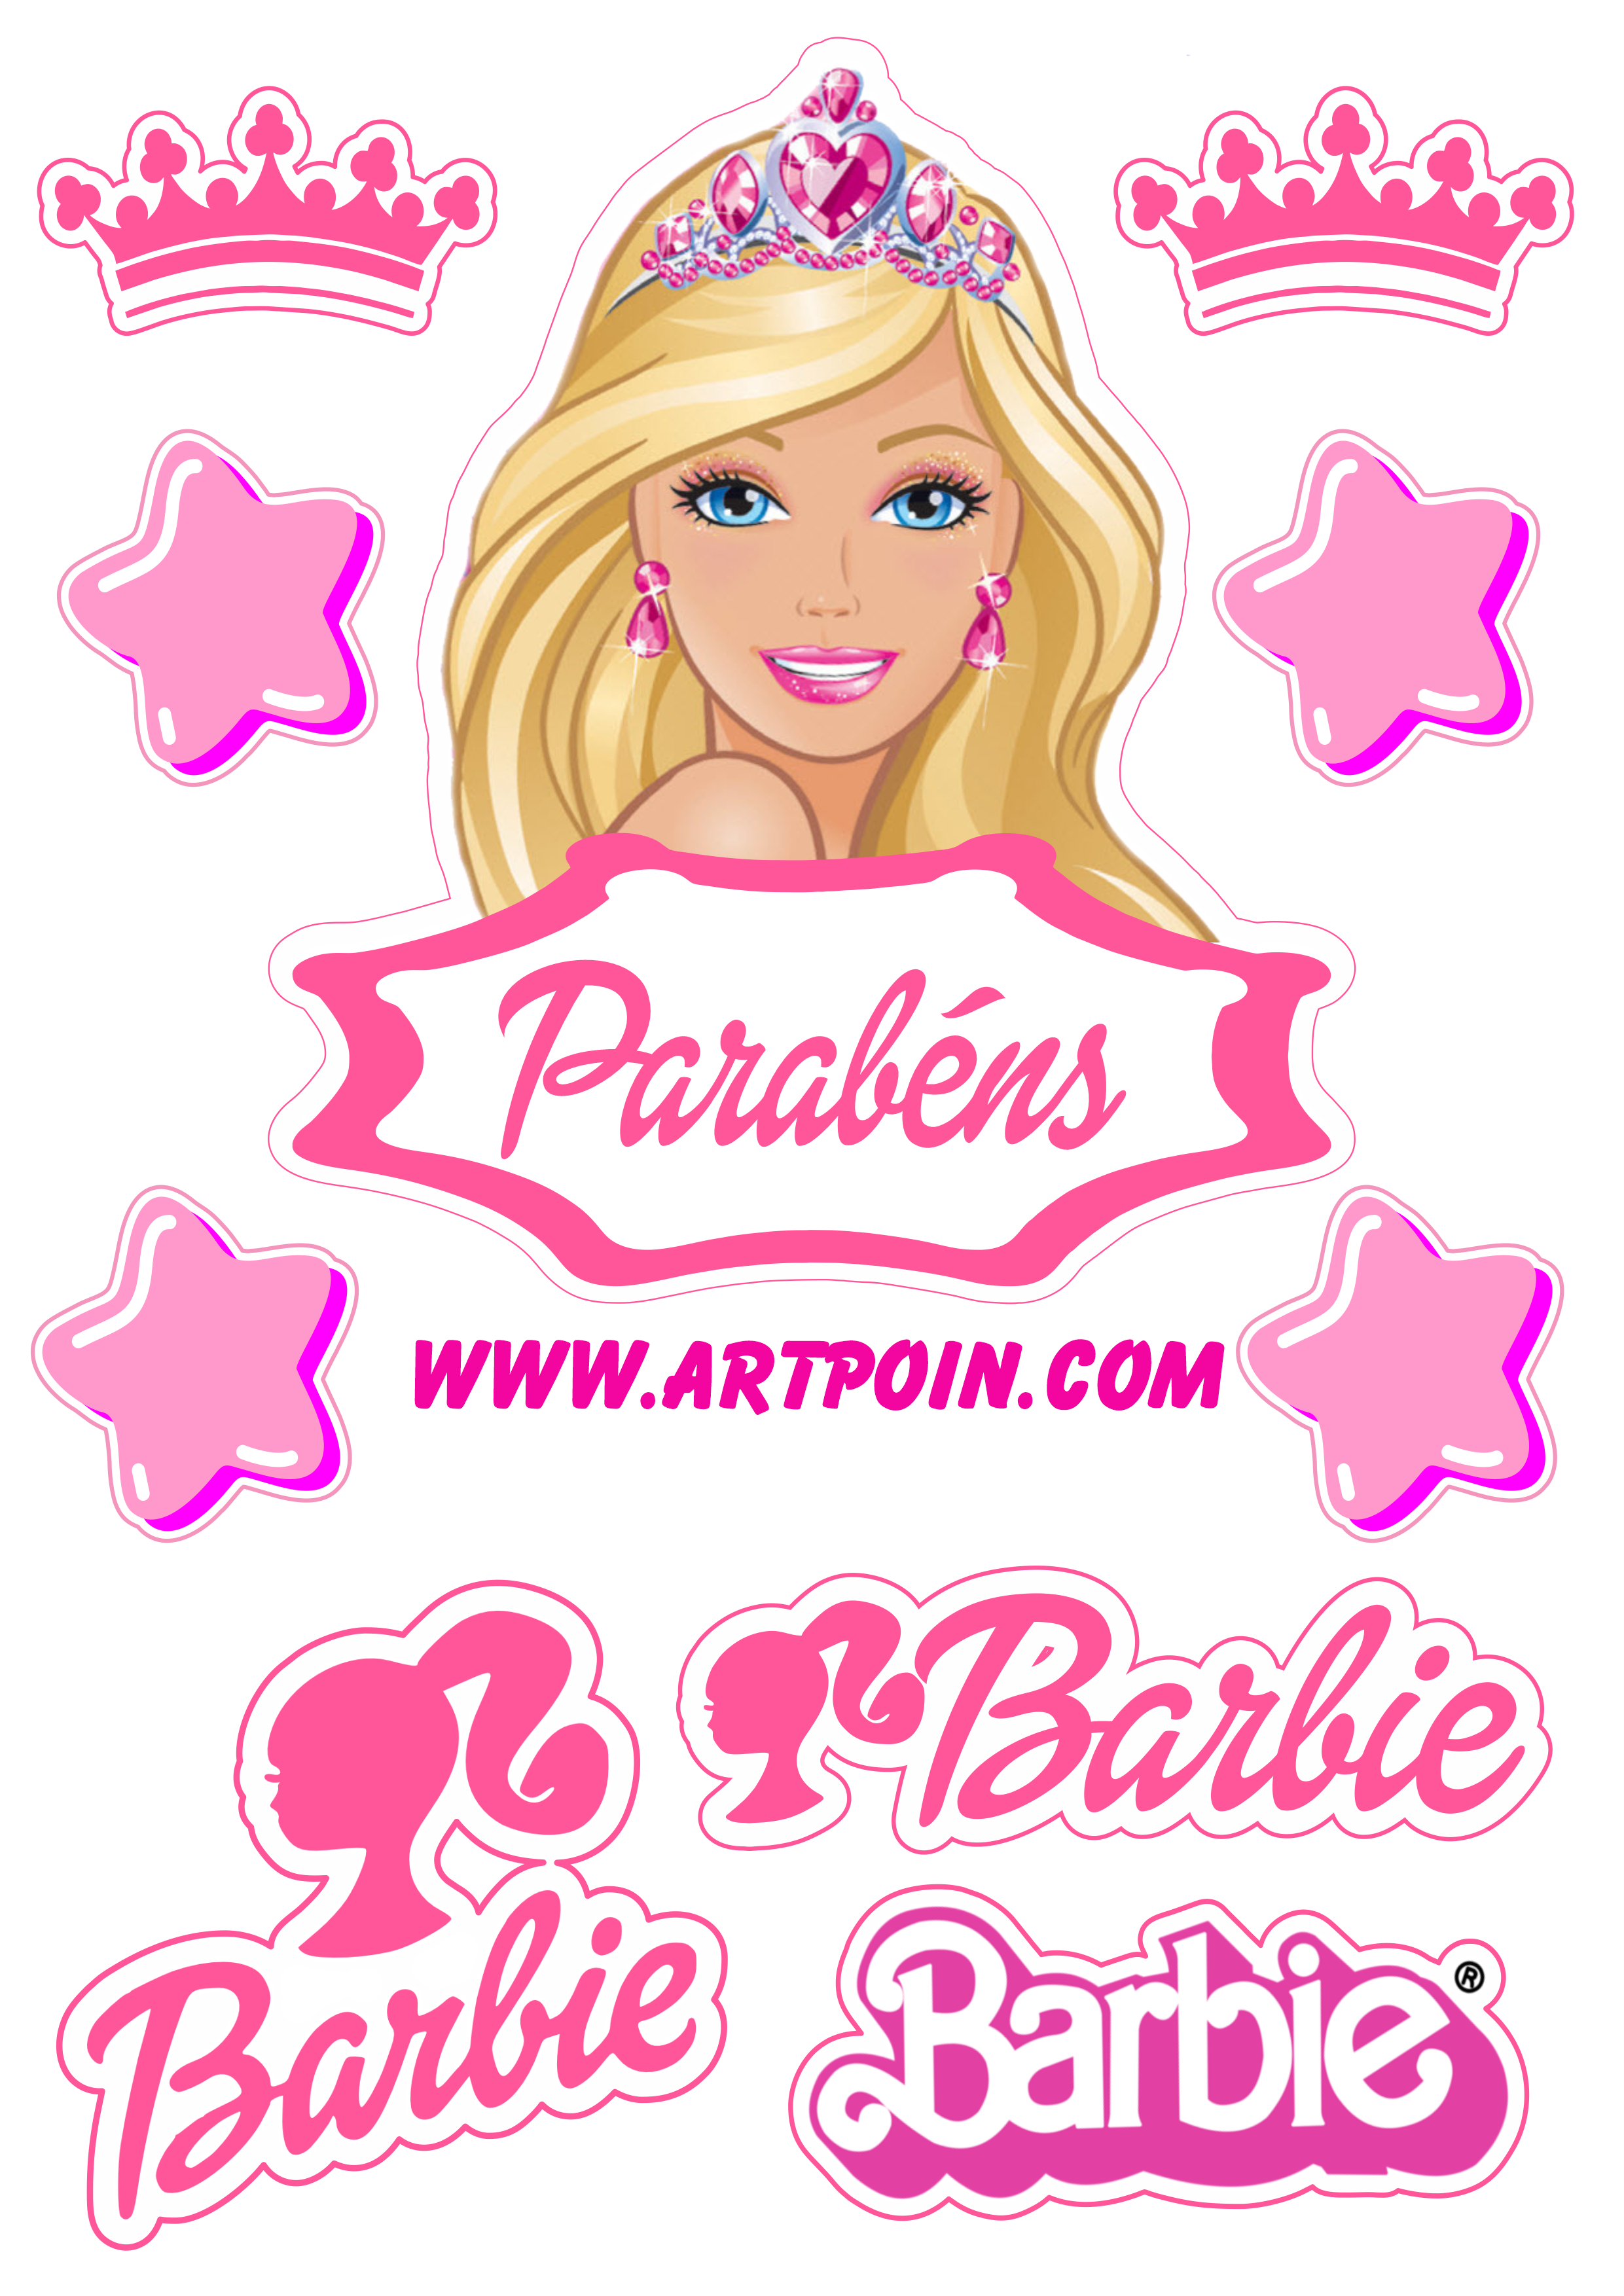 Topo Topper De Bolo Personalizado Barbie Morena